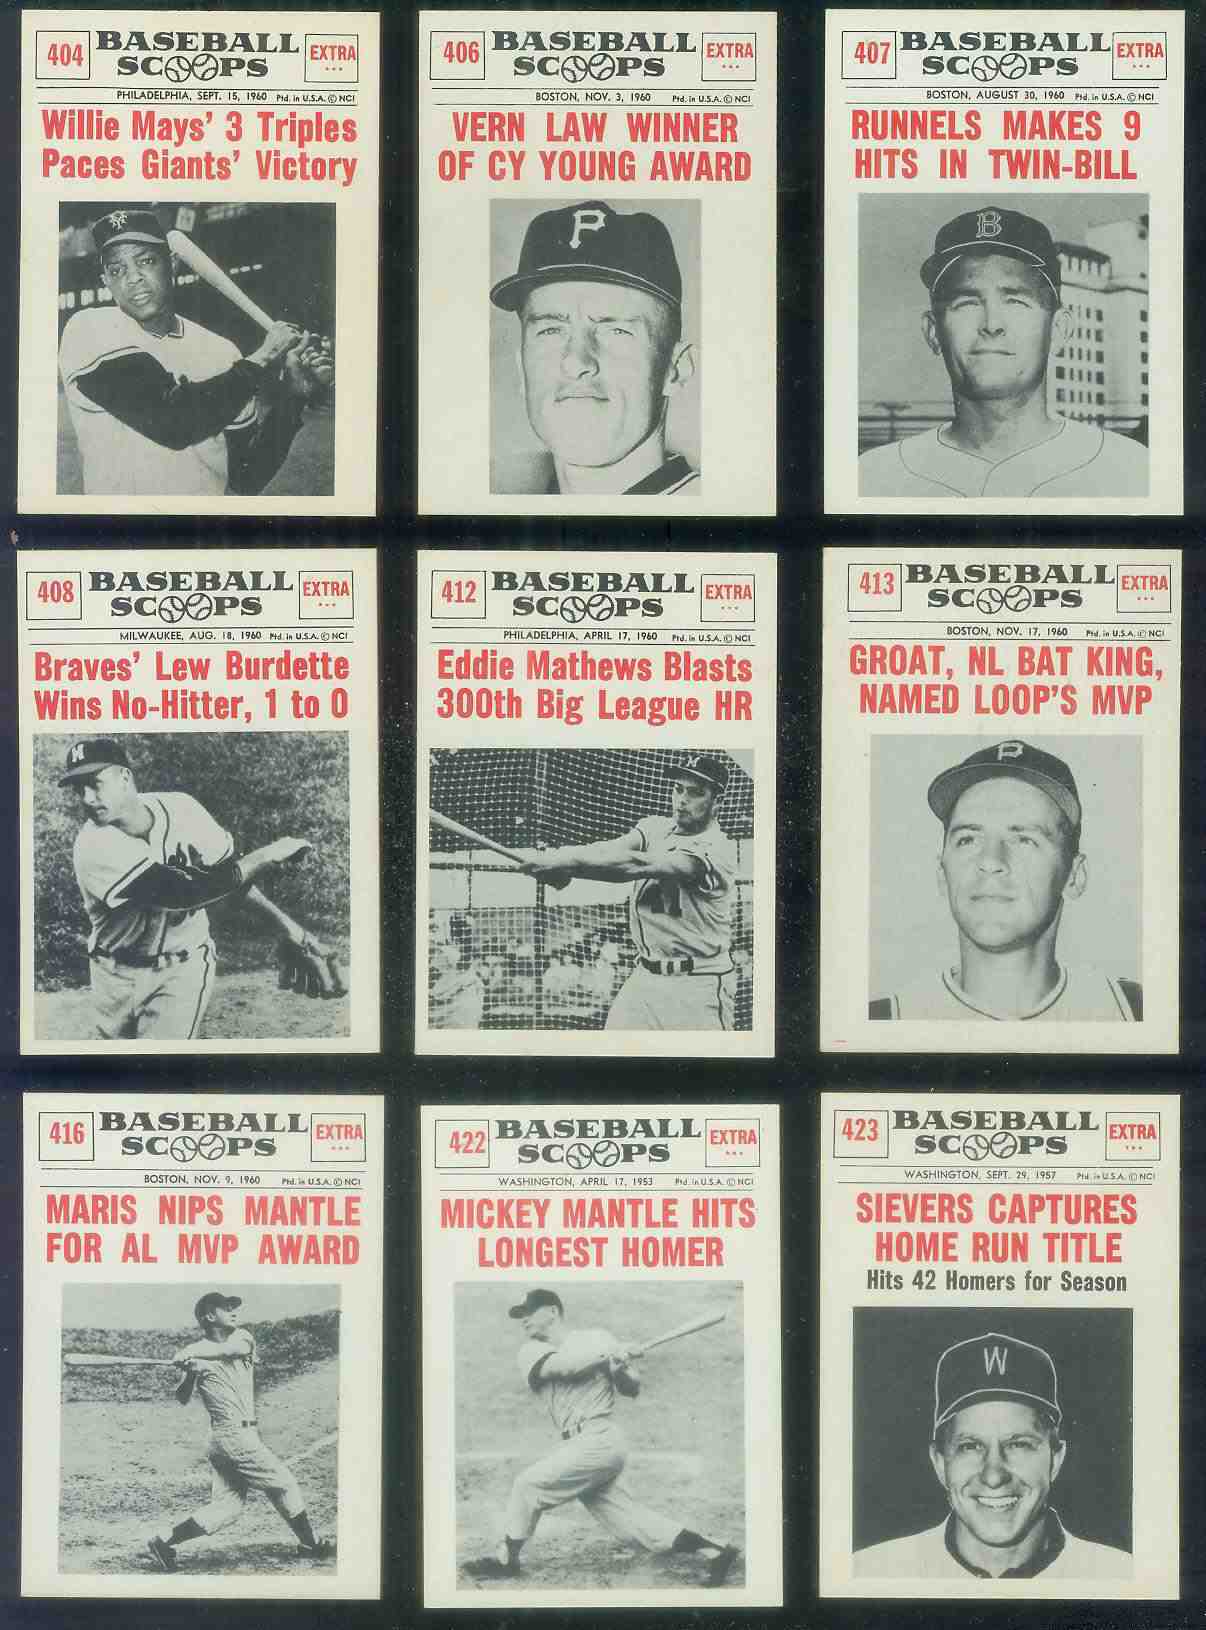 1961 Nu-Card Scoops #412 Eddie Mathews 'Blasts 300th Big League HR' (Braves Baseball cards value